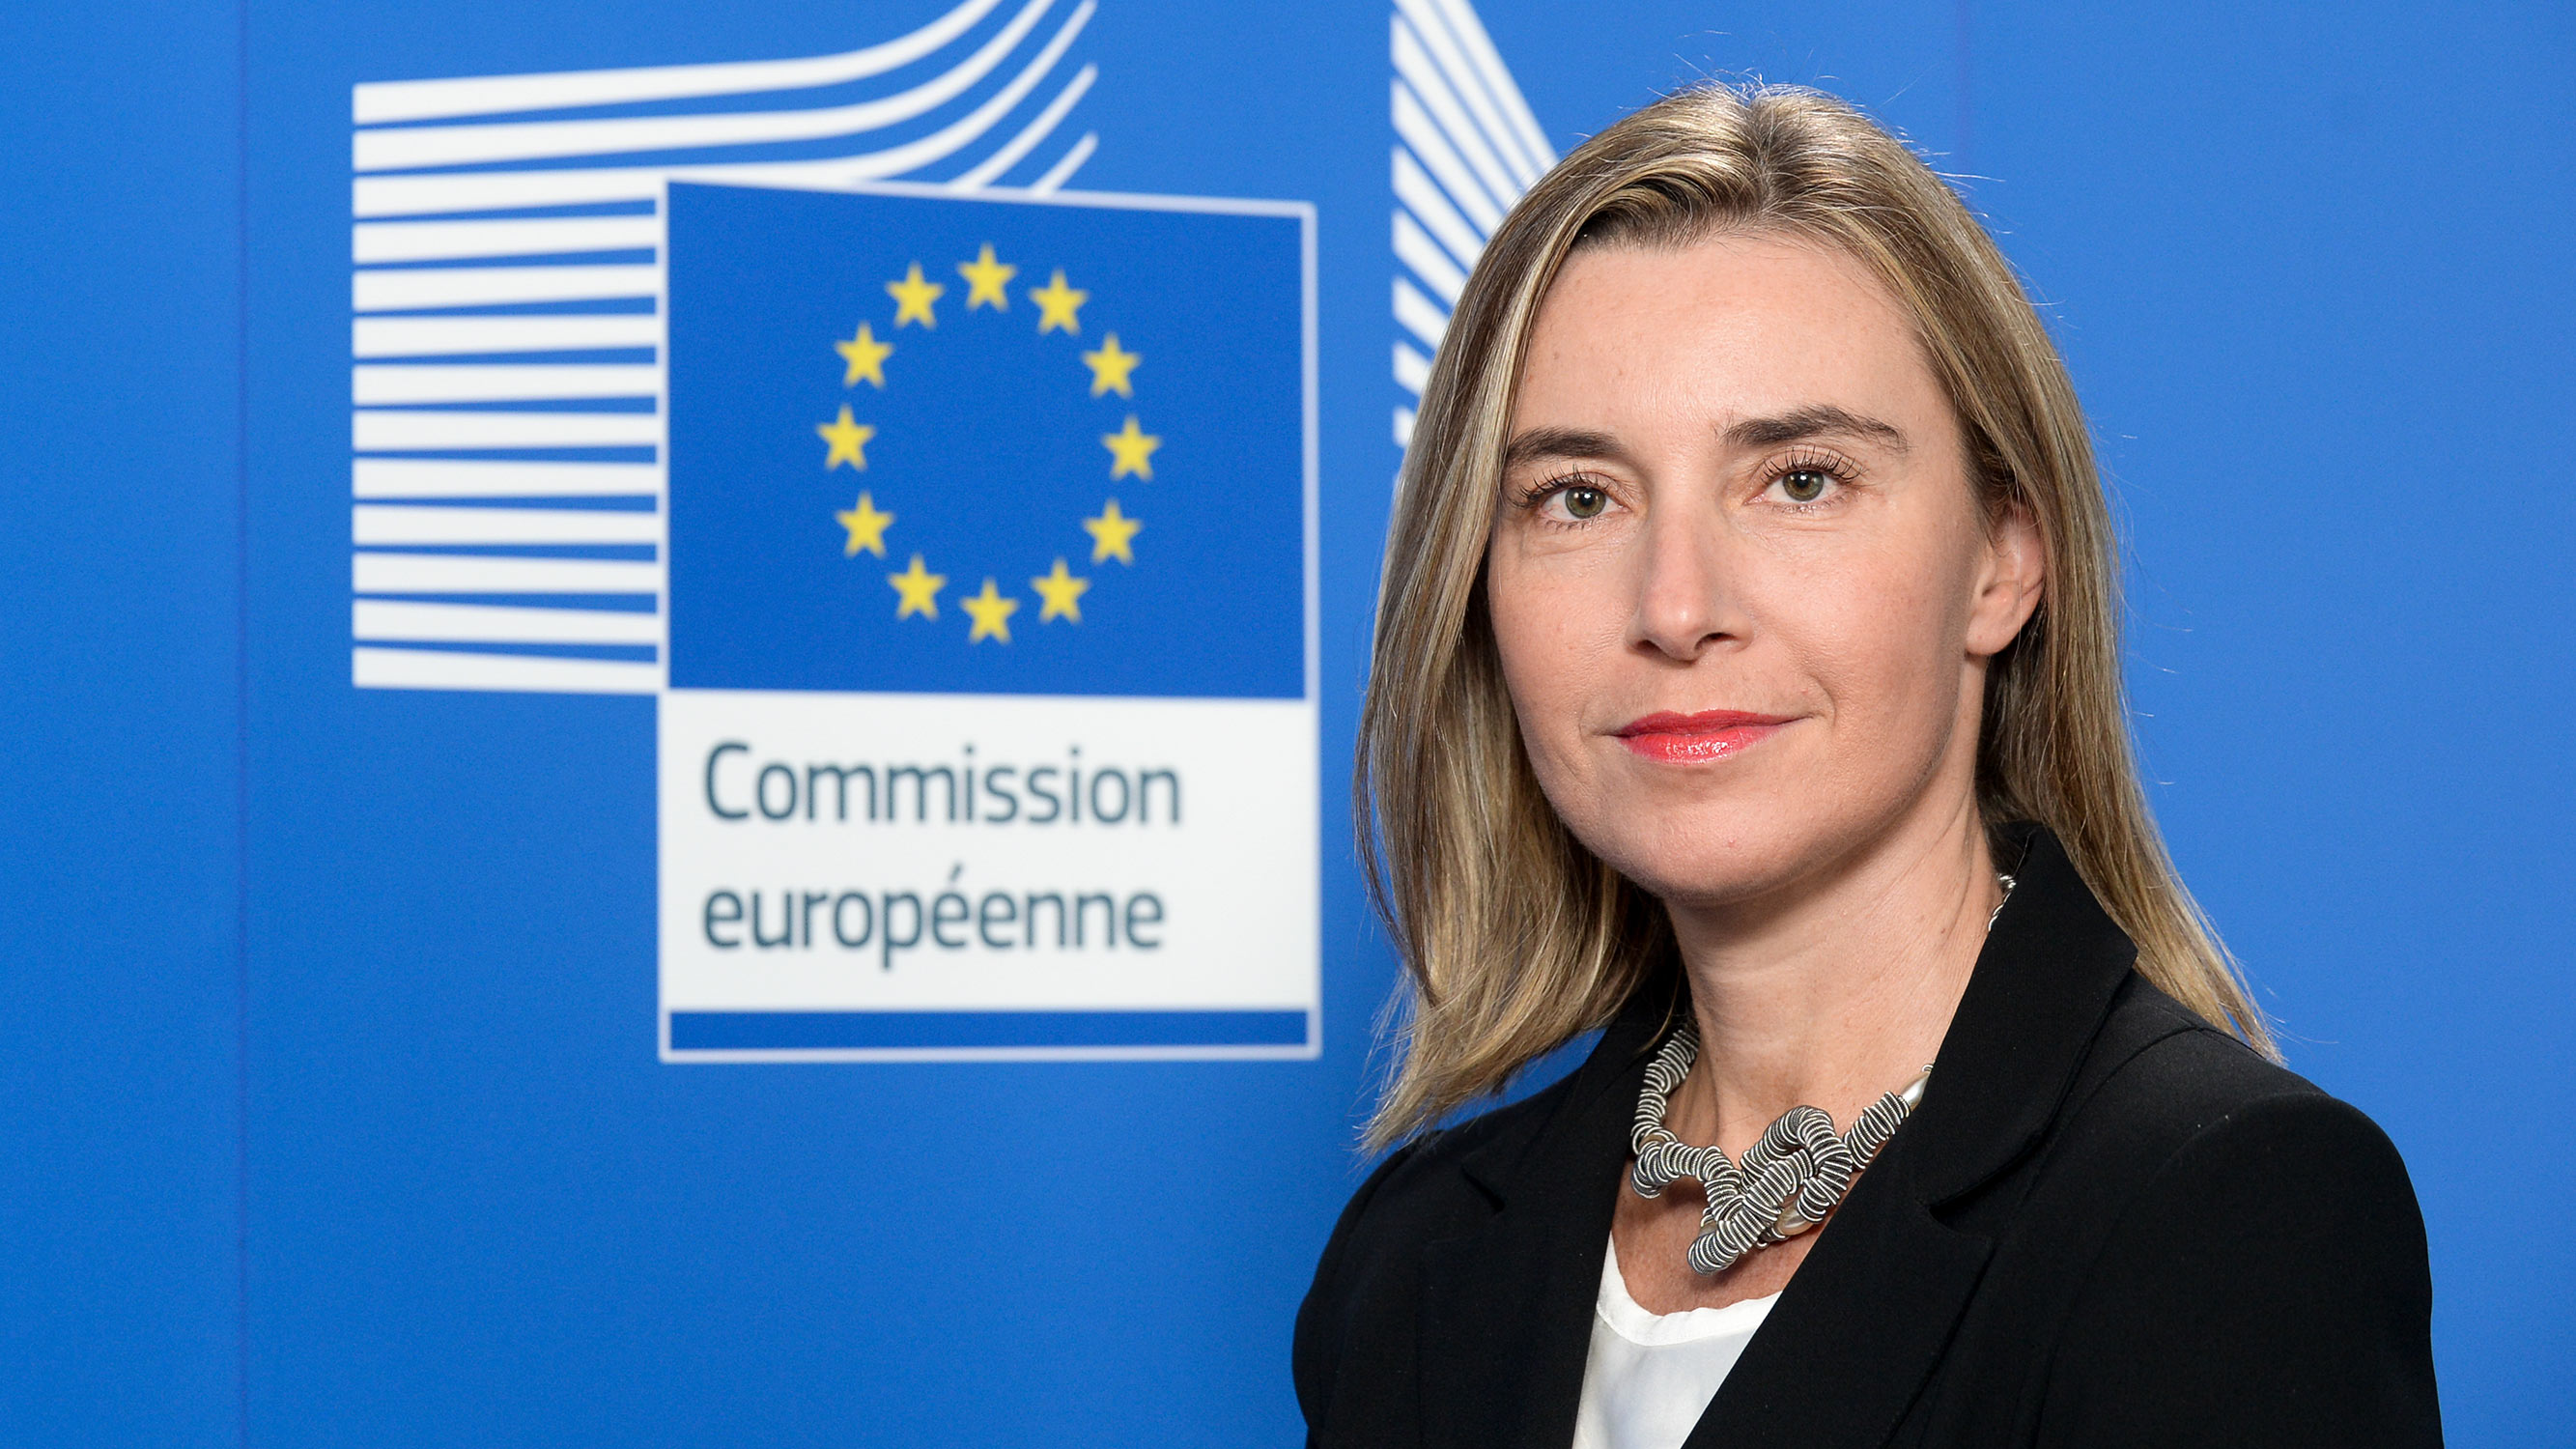 Federica Mogherini, EU High Representative and Vice President